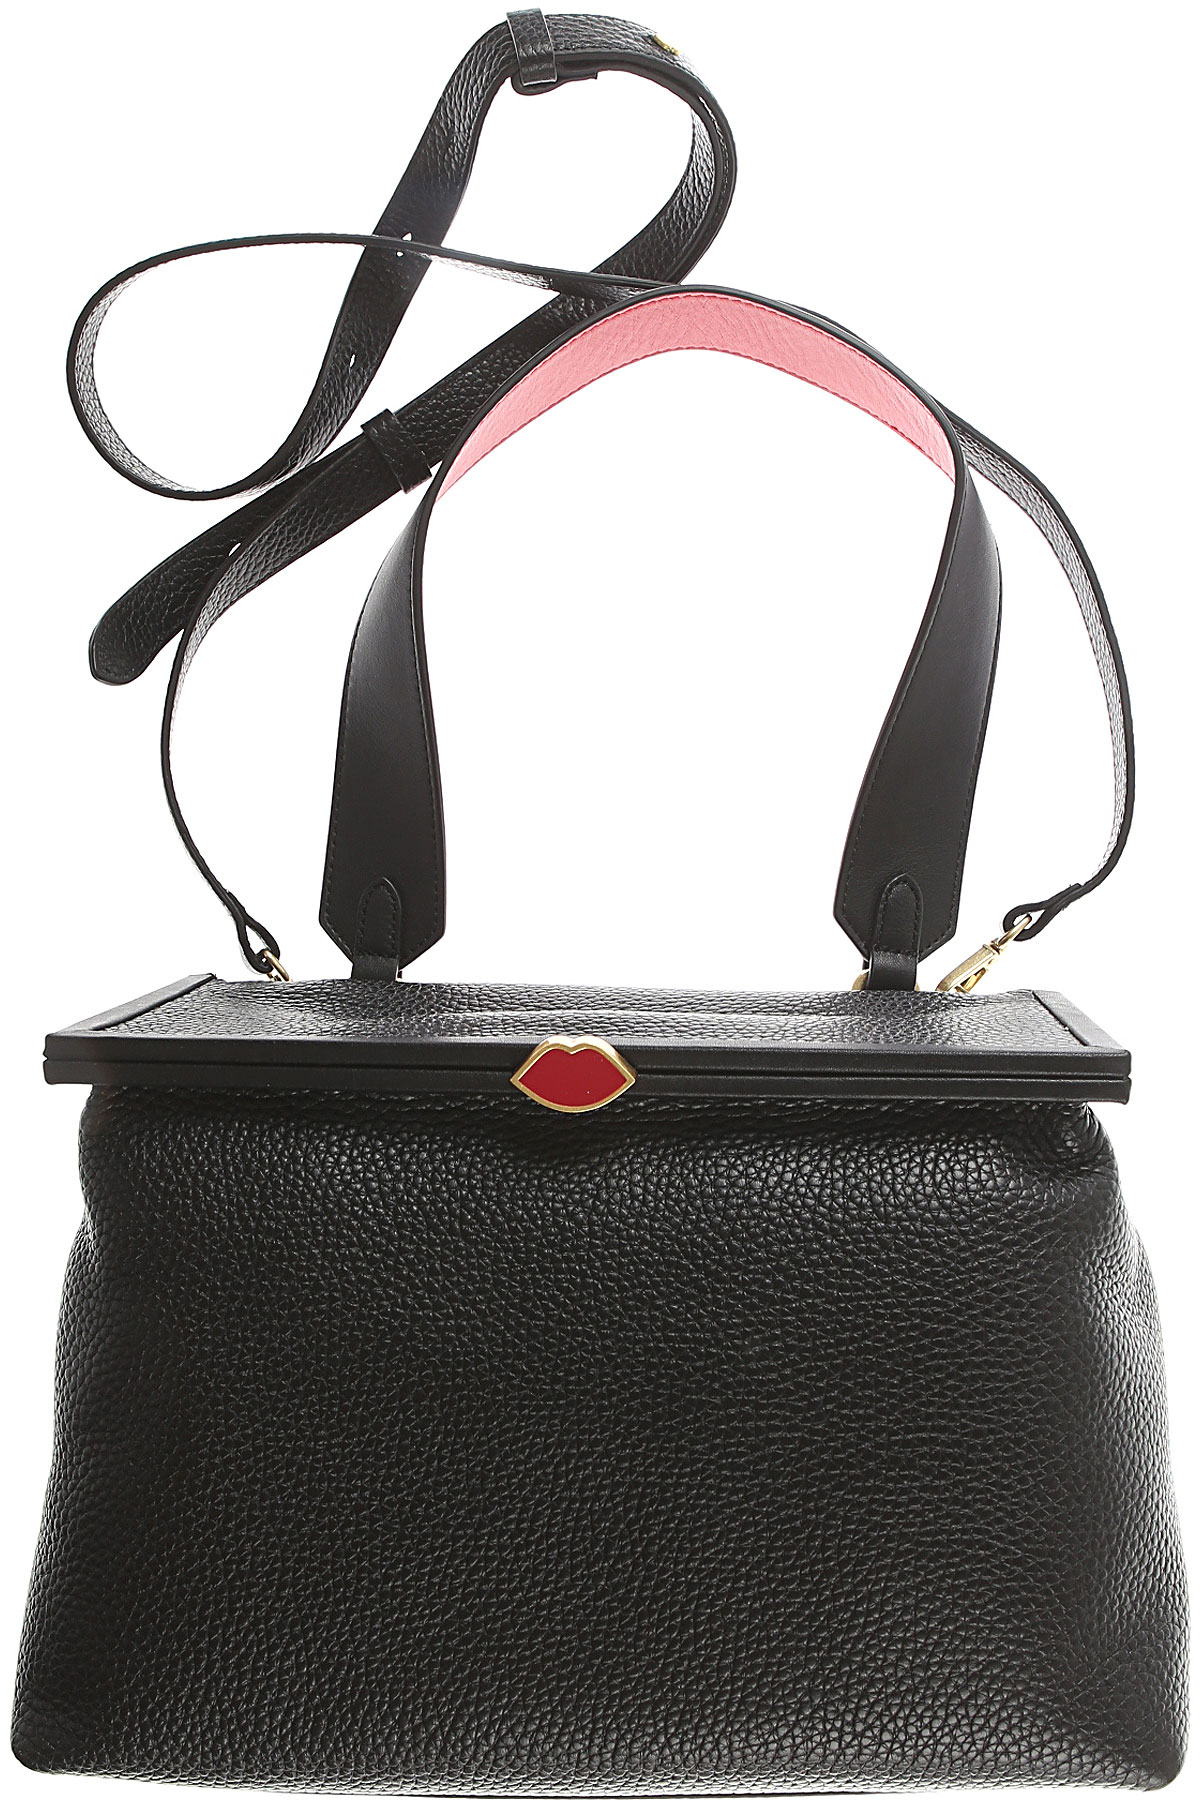 lulu guinness handbags luluhand 50138012 large 1